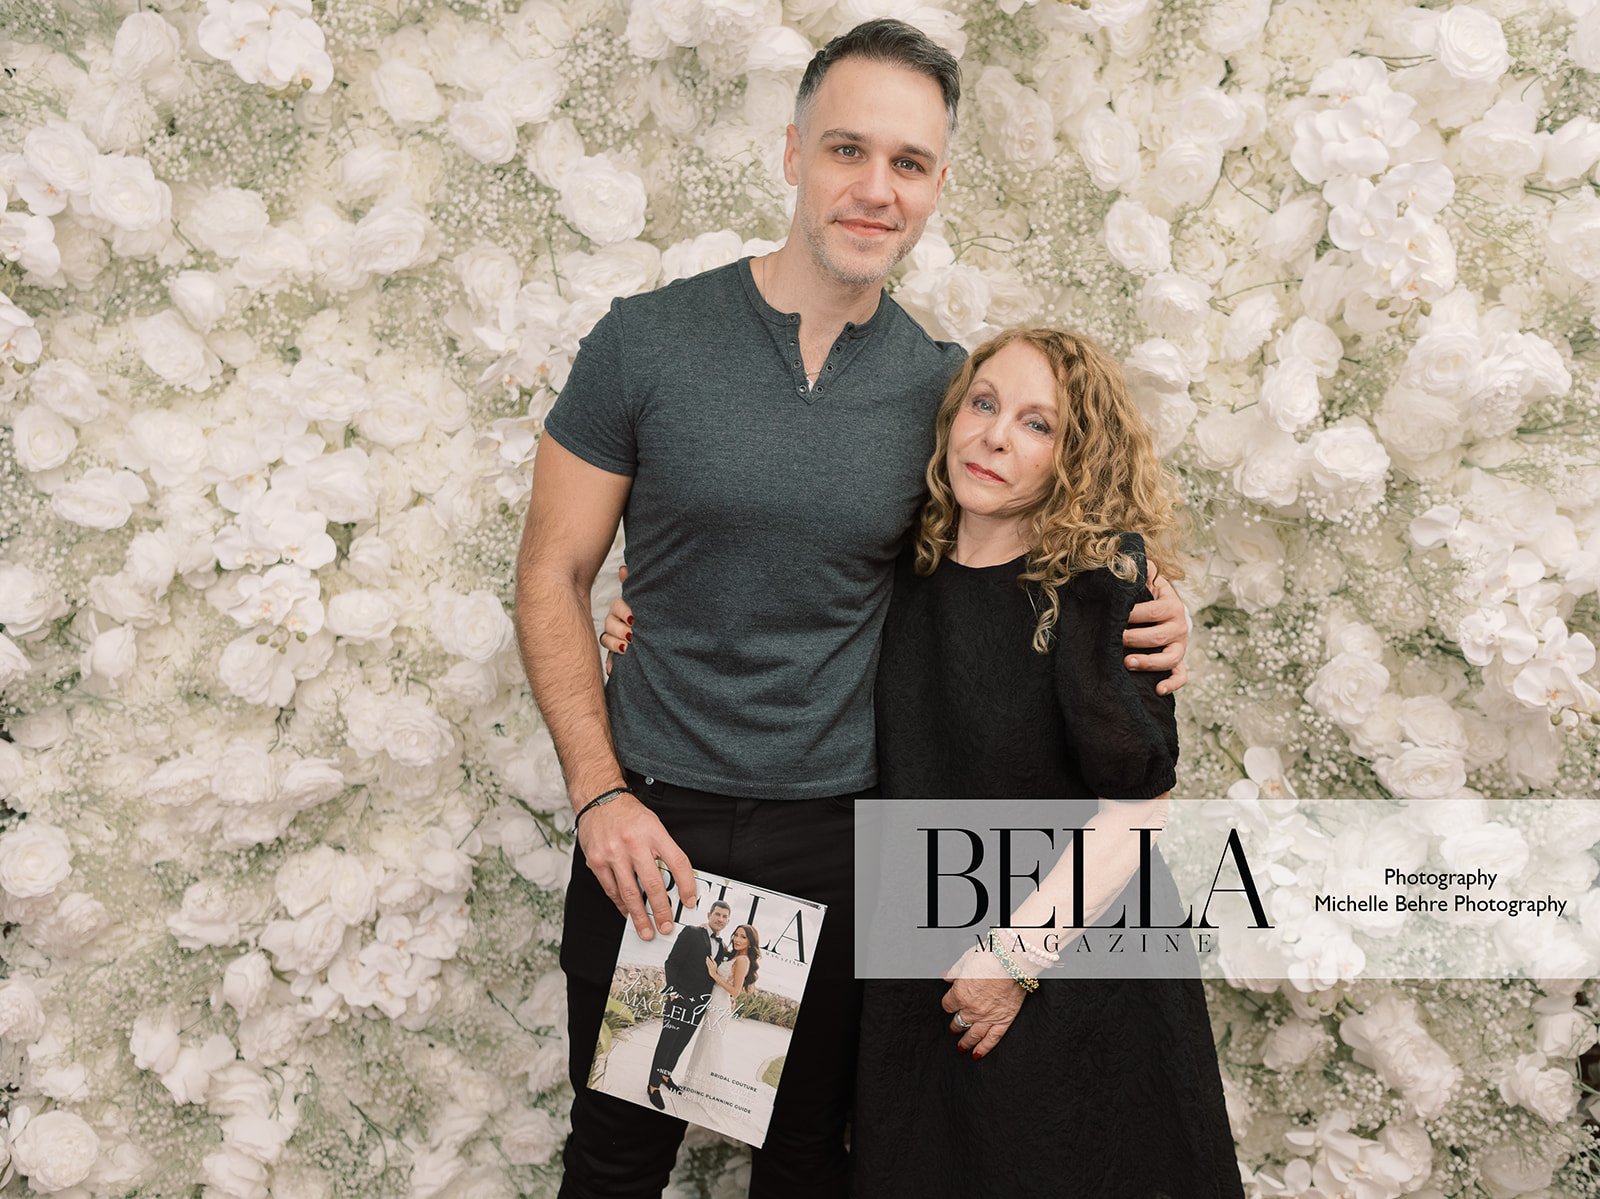 Michelle-Behre-Photography-BELLA-Magazine-Wedding-Event-La-Pulperia-New-York-62.jpg